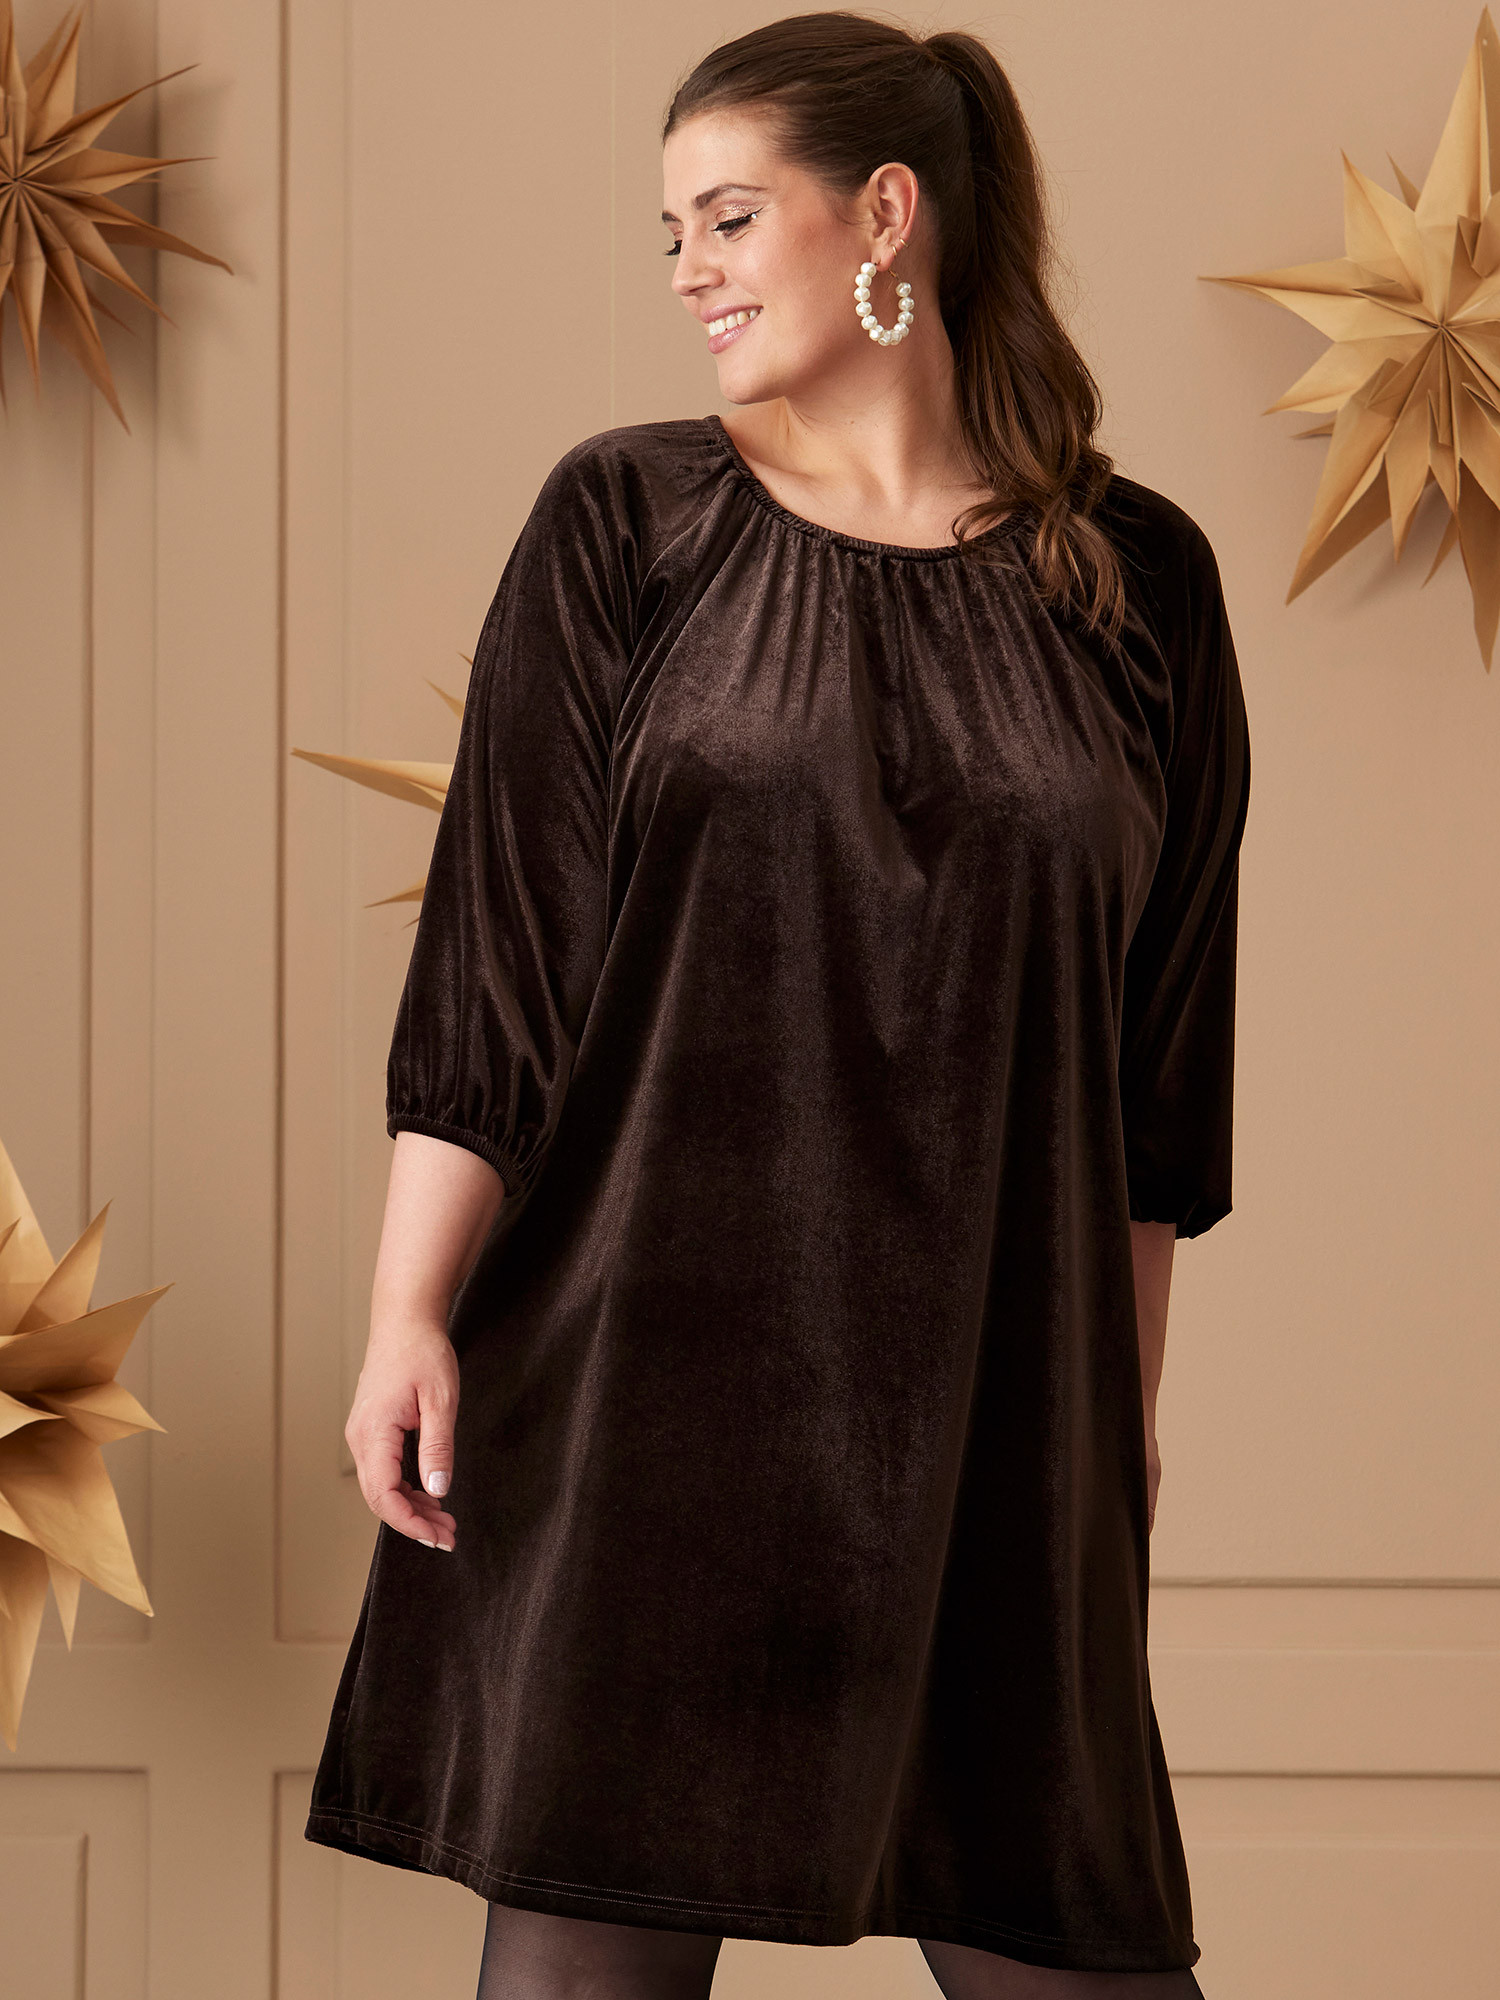 Jaylee - Vacker svart glitterklänning